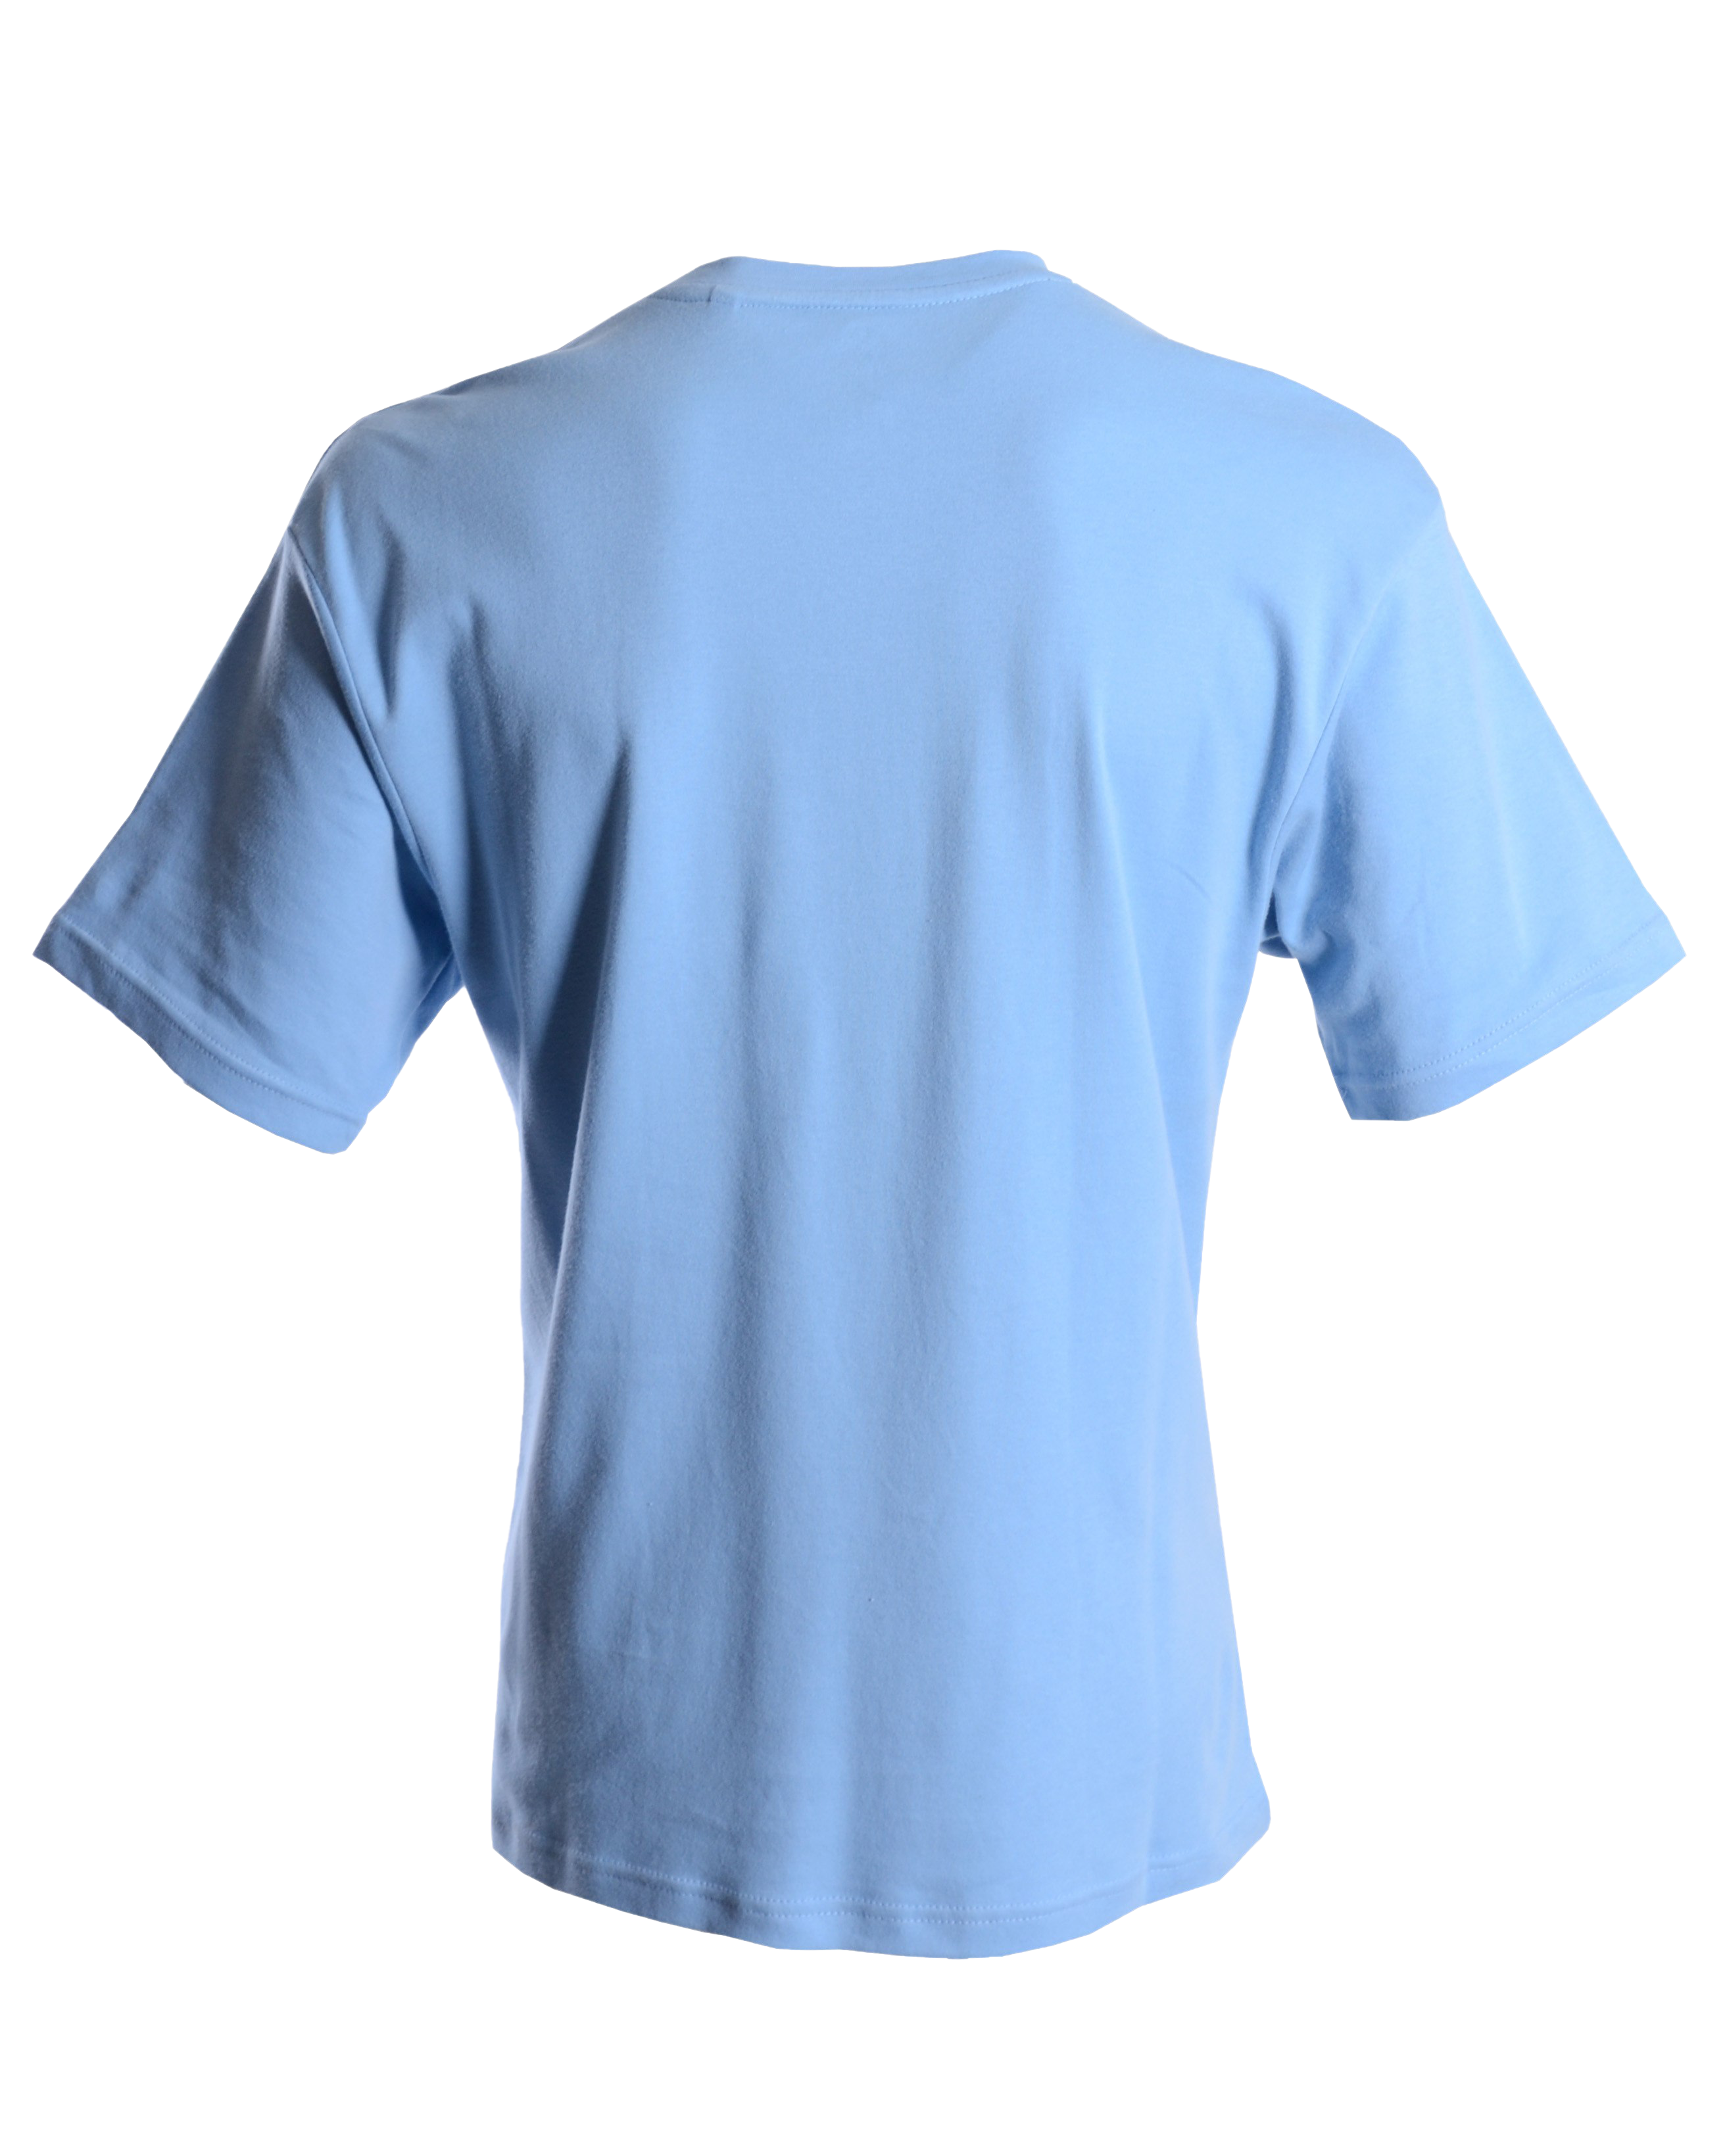 Camiseta azul plana PNG imagen de alta calidad